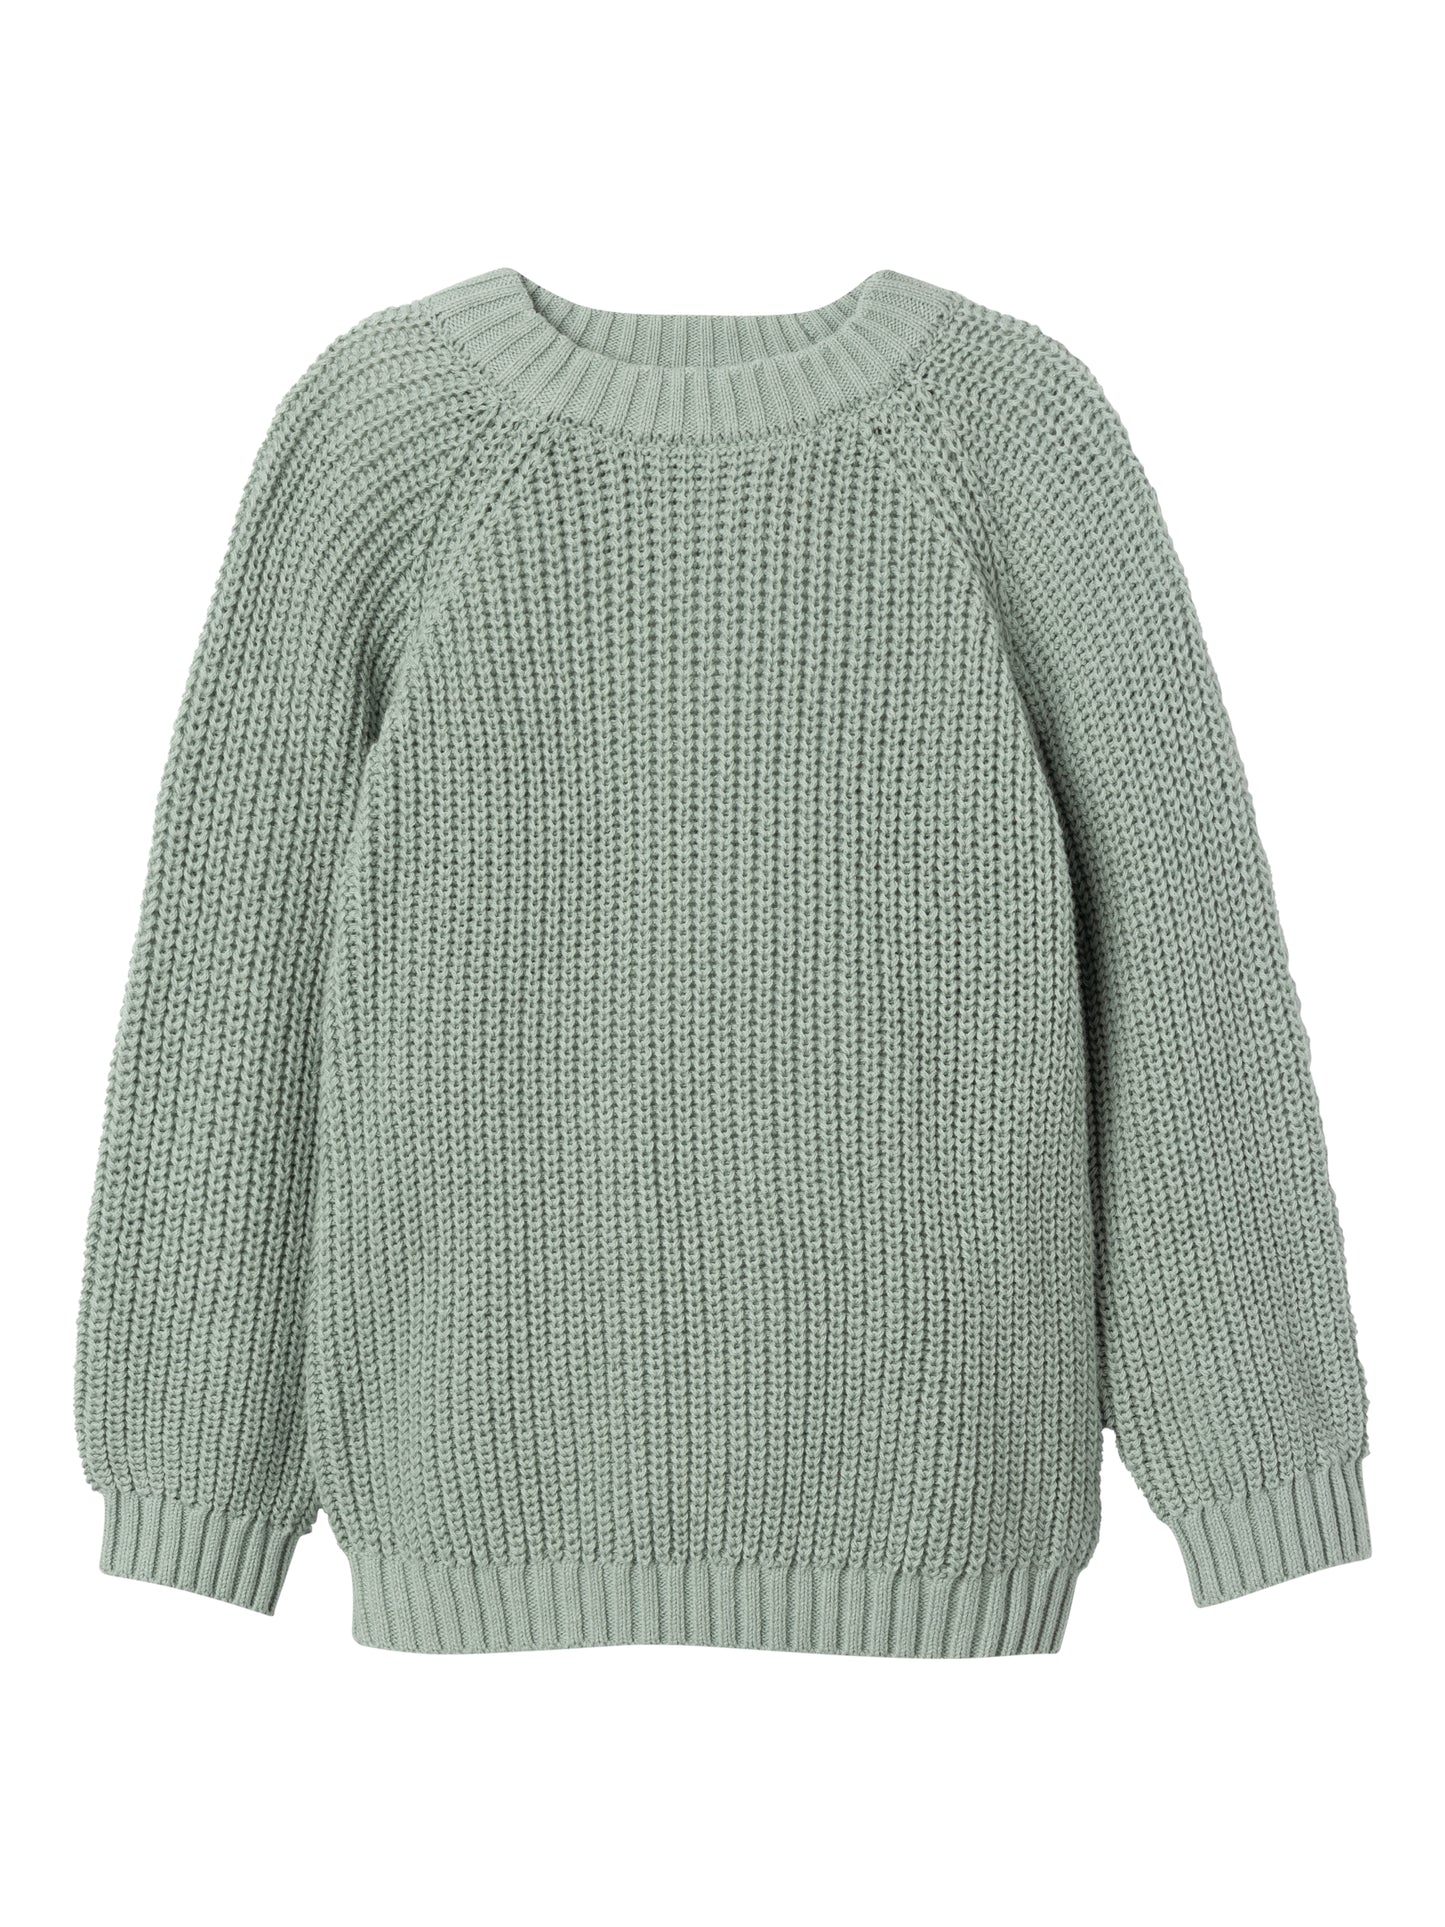 Lil atelier - knitted sweater - Jadeite